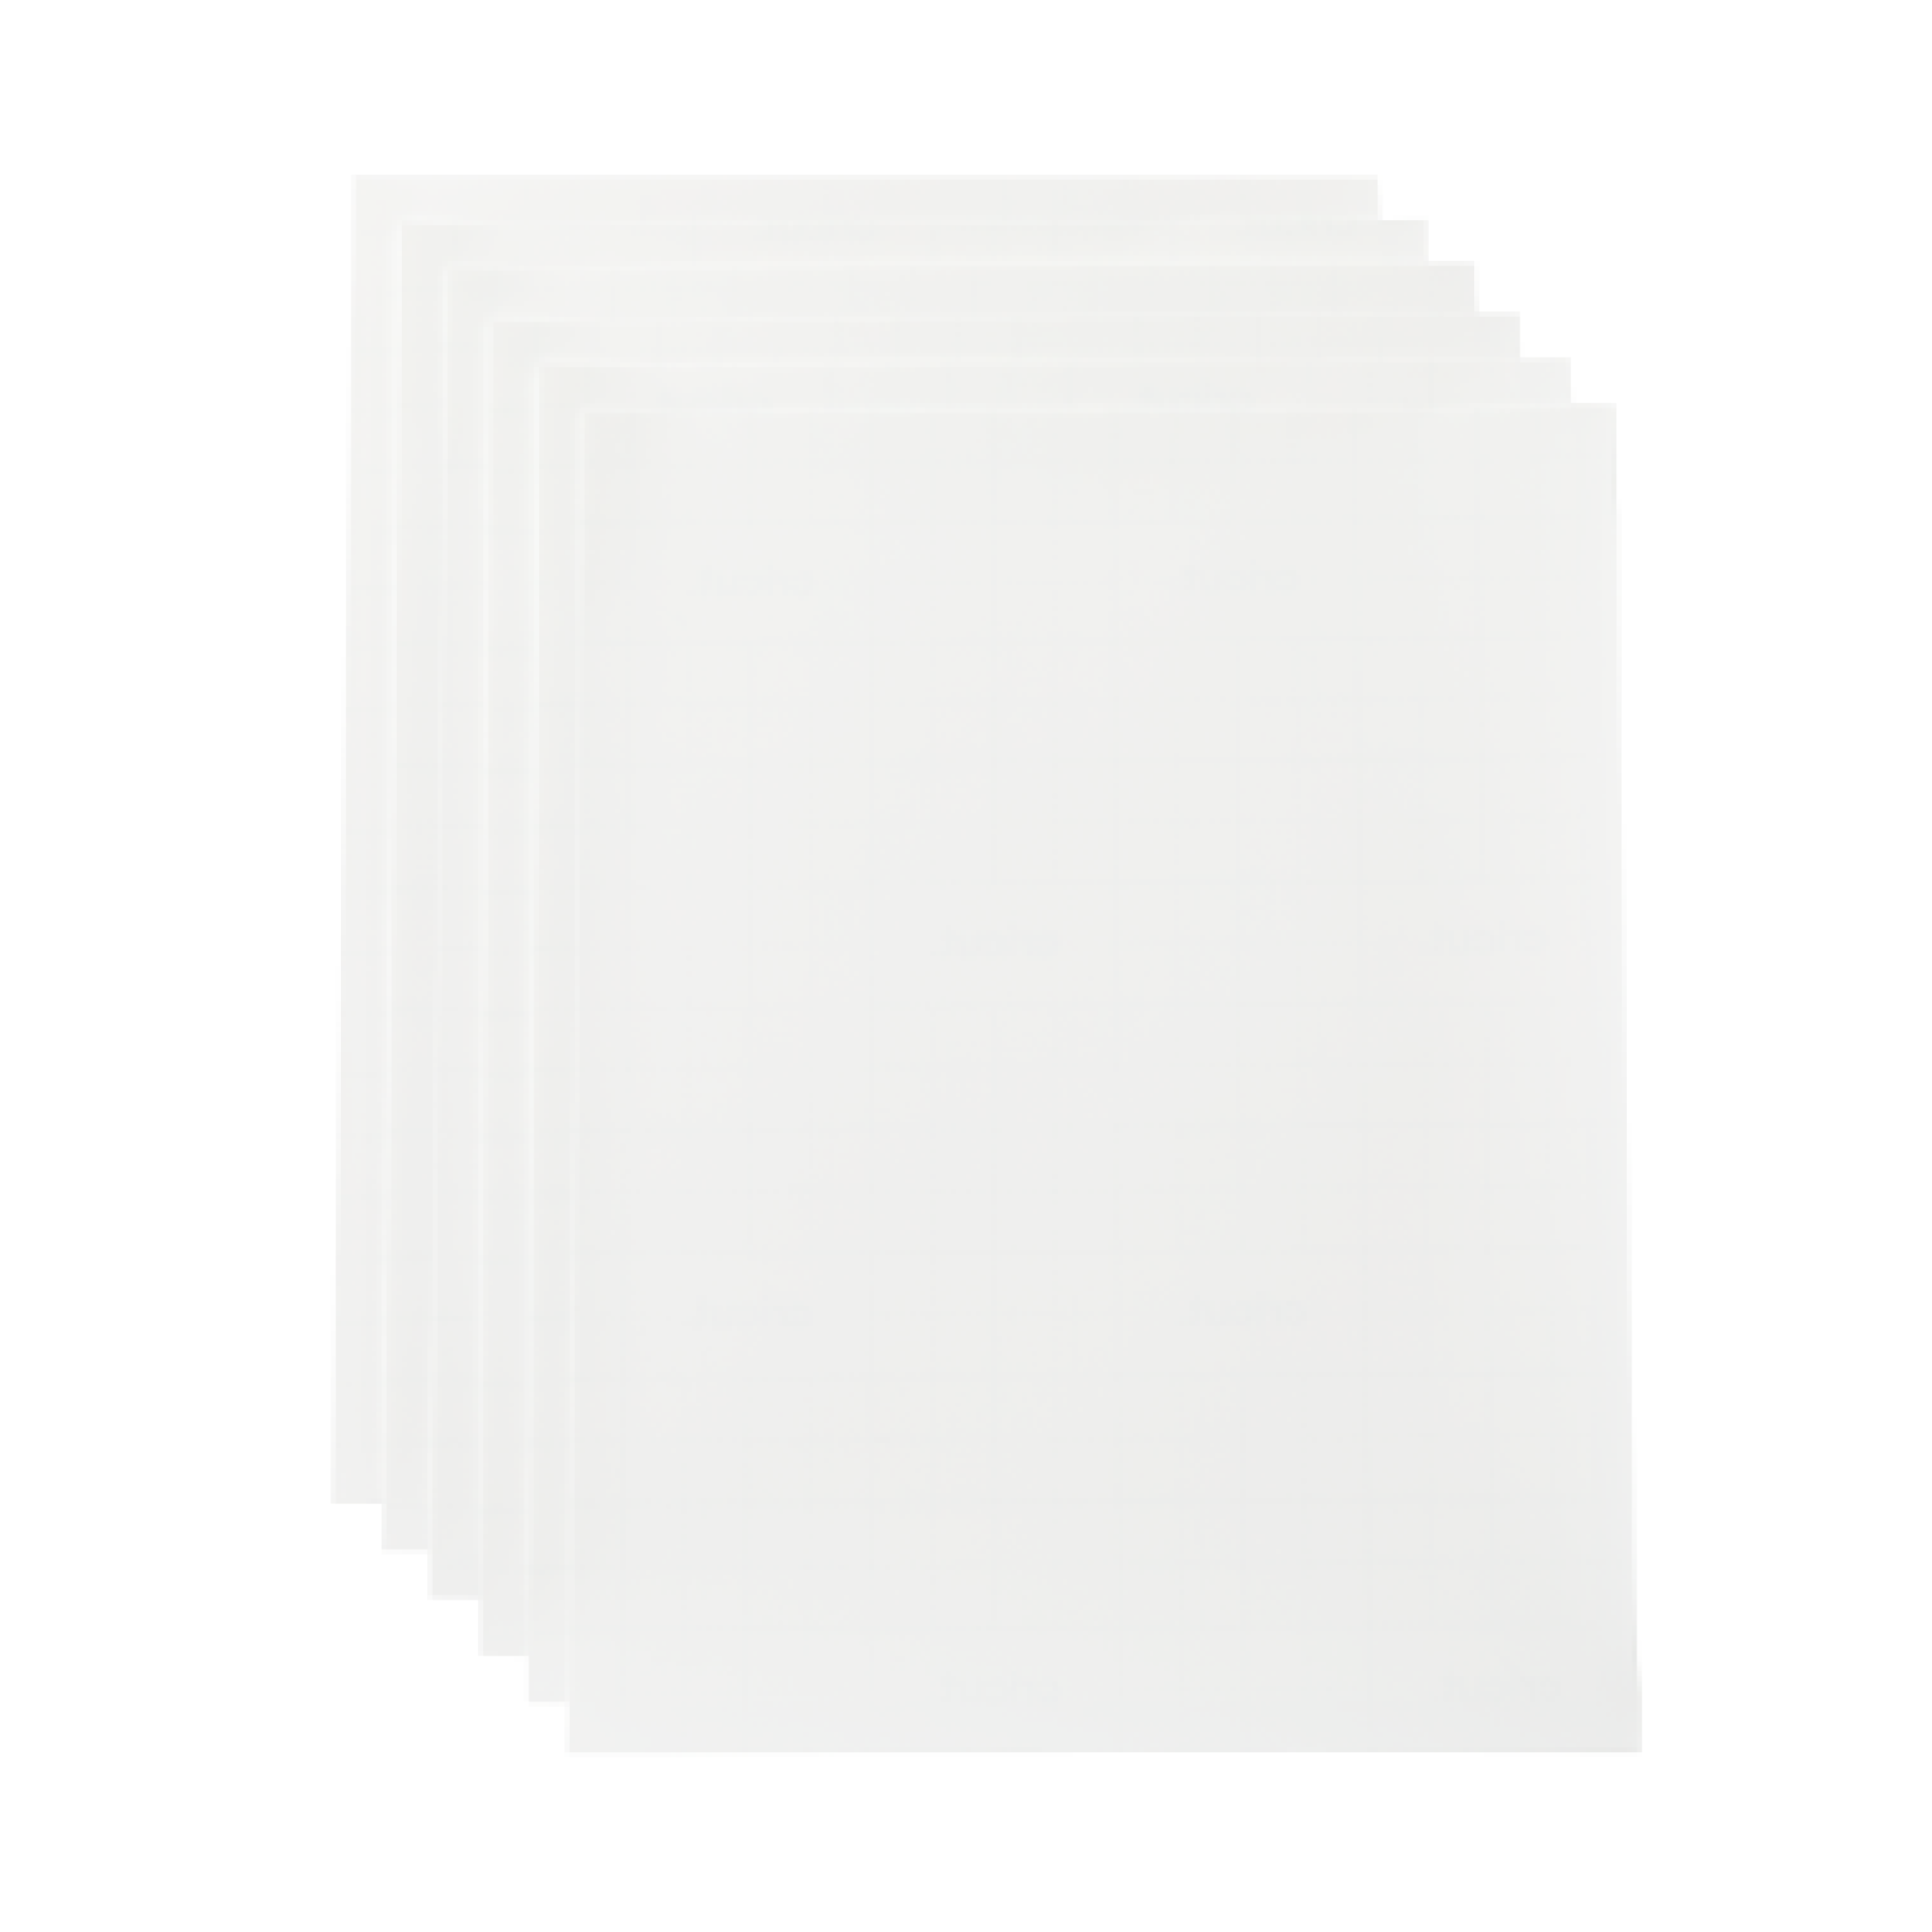 Cricut Printable Sticker Paper - 8 US Letter Sheets for Crisp Decals